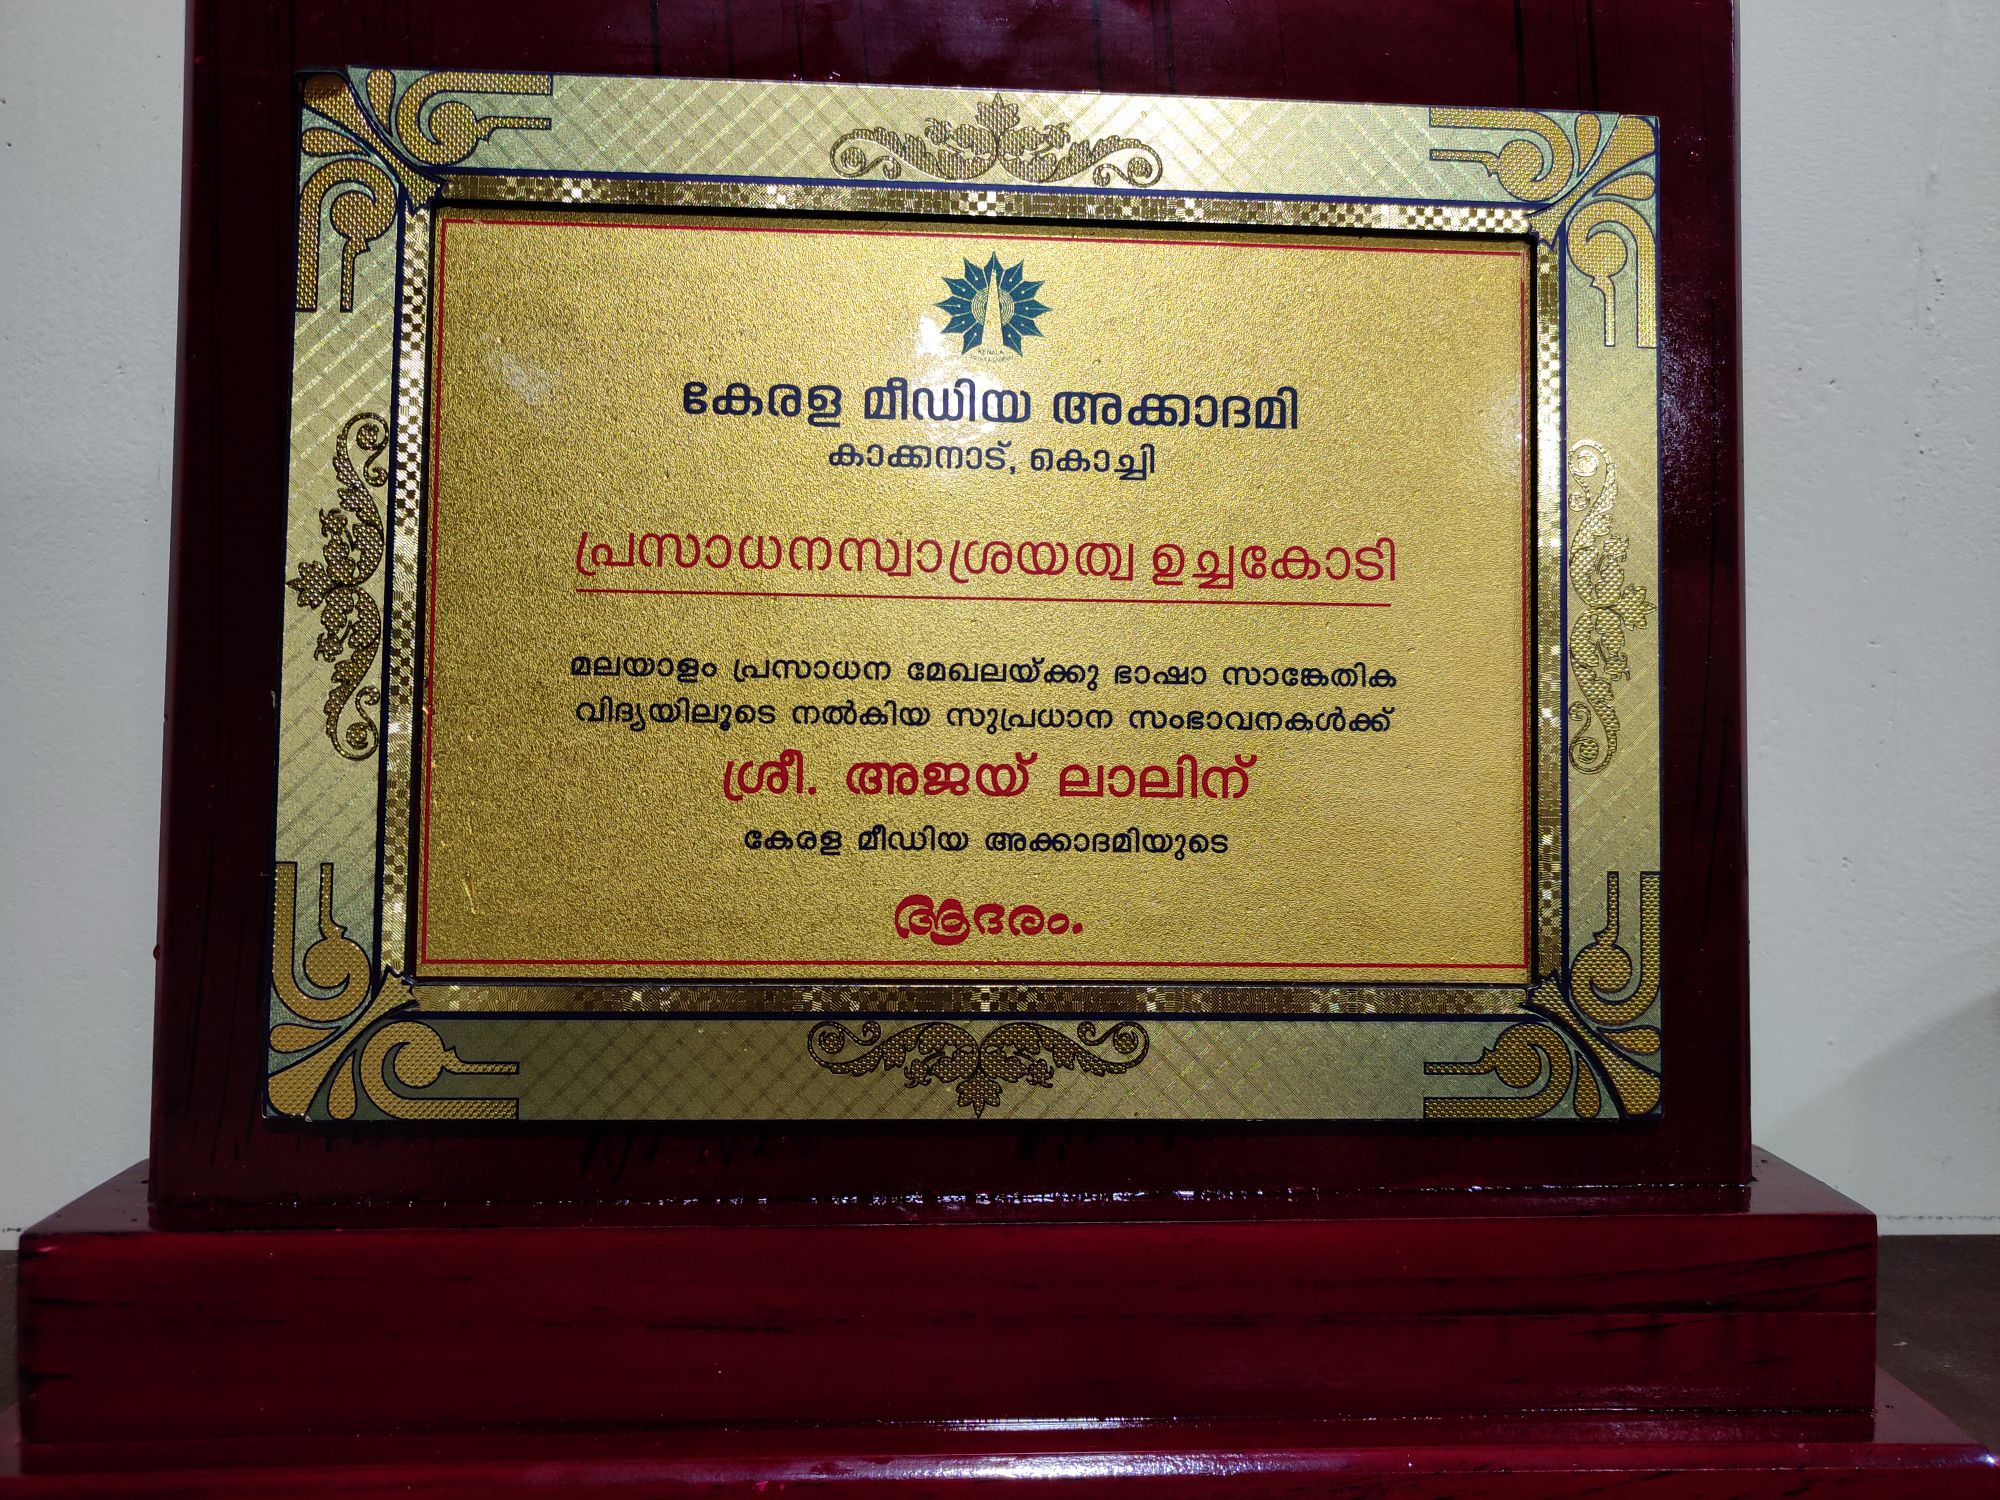 Kerala Media Academy Award - Recognizing Excellence